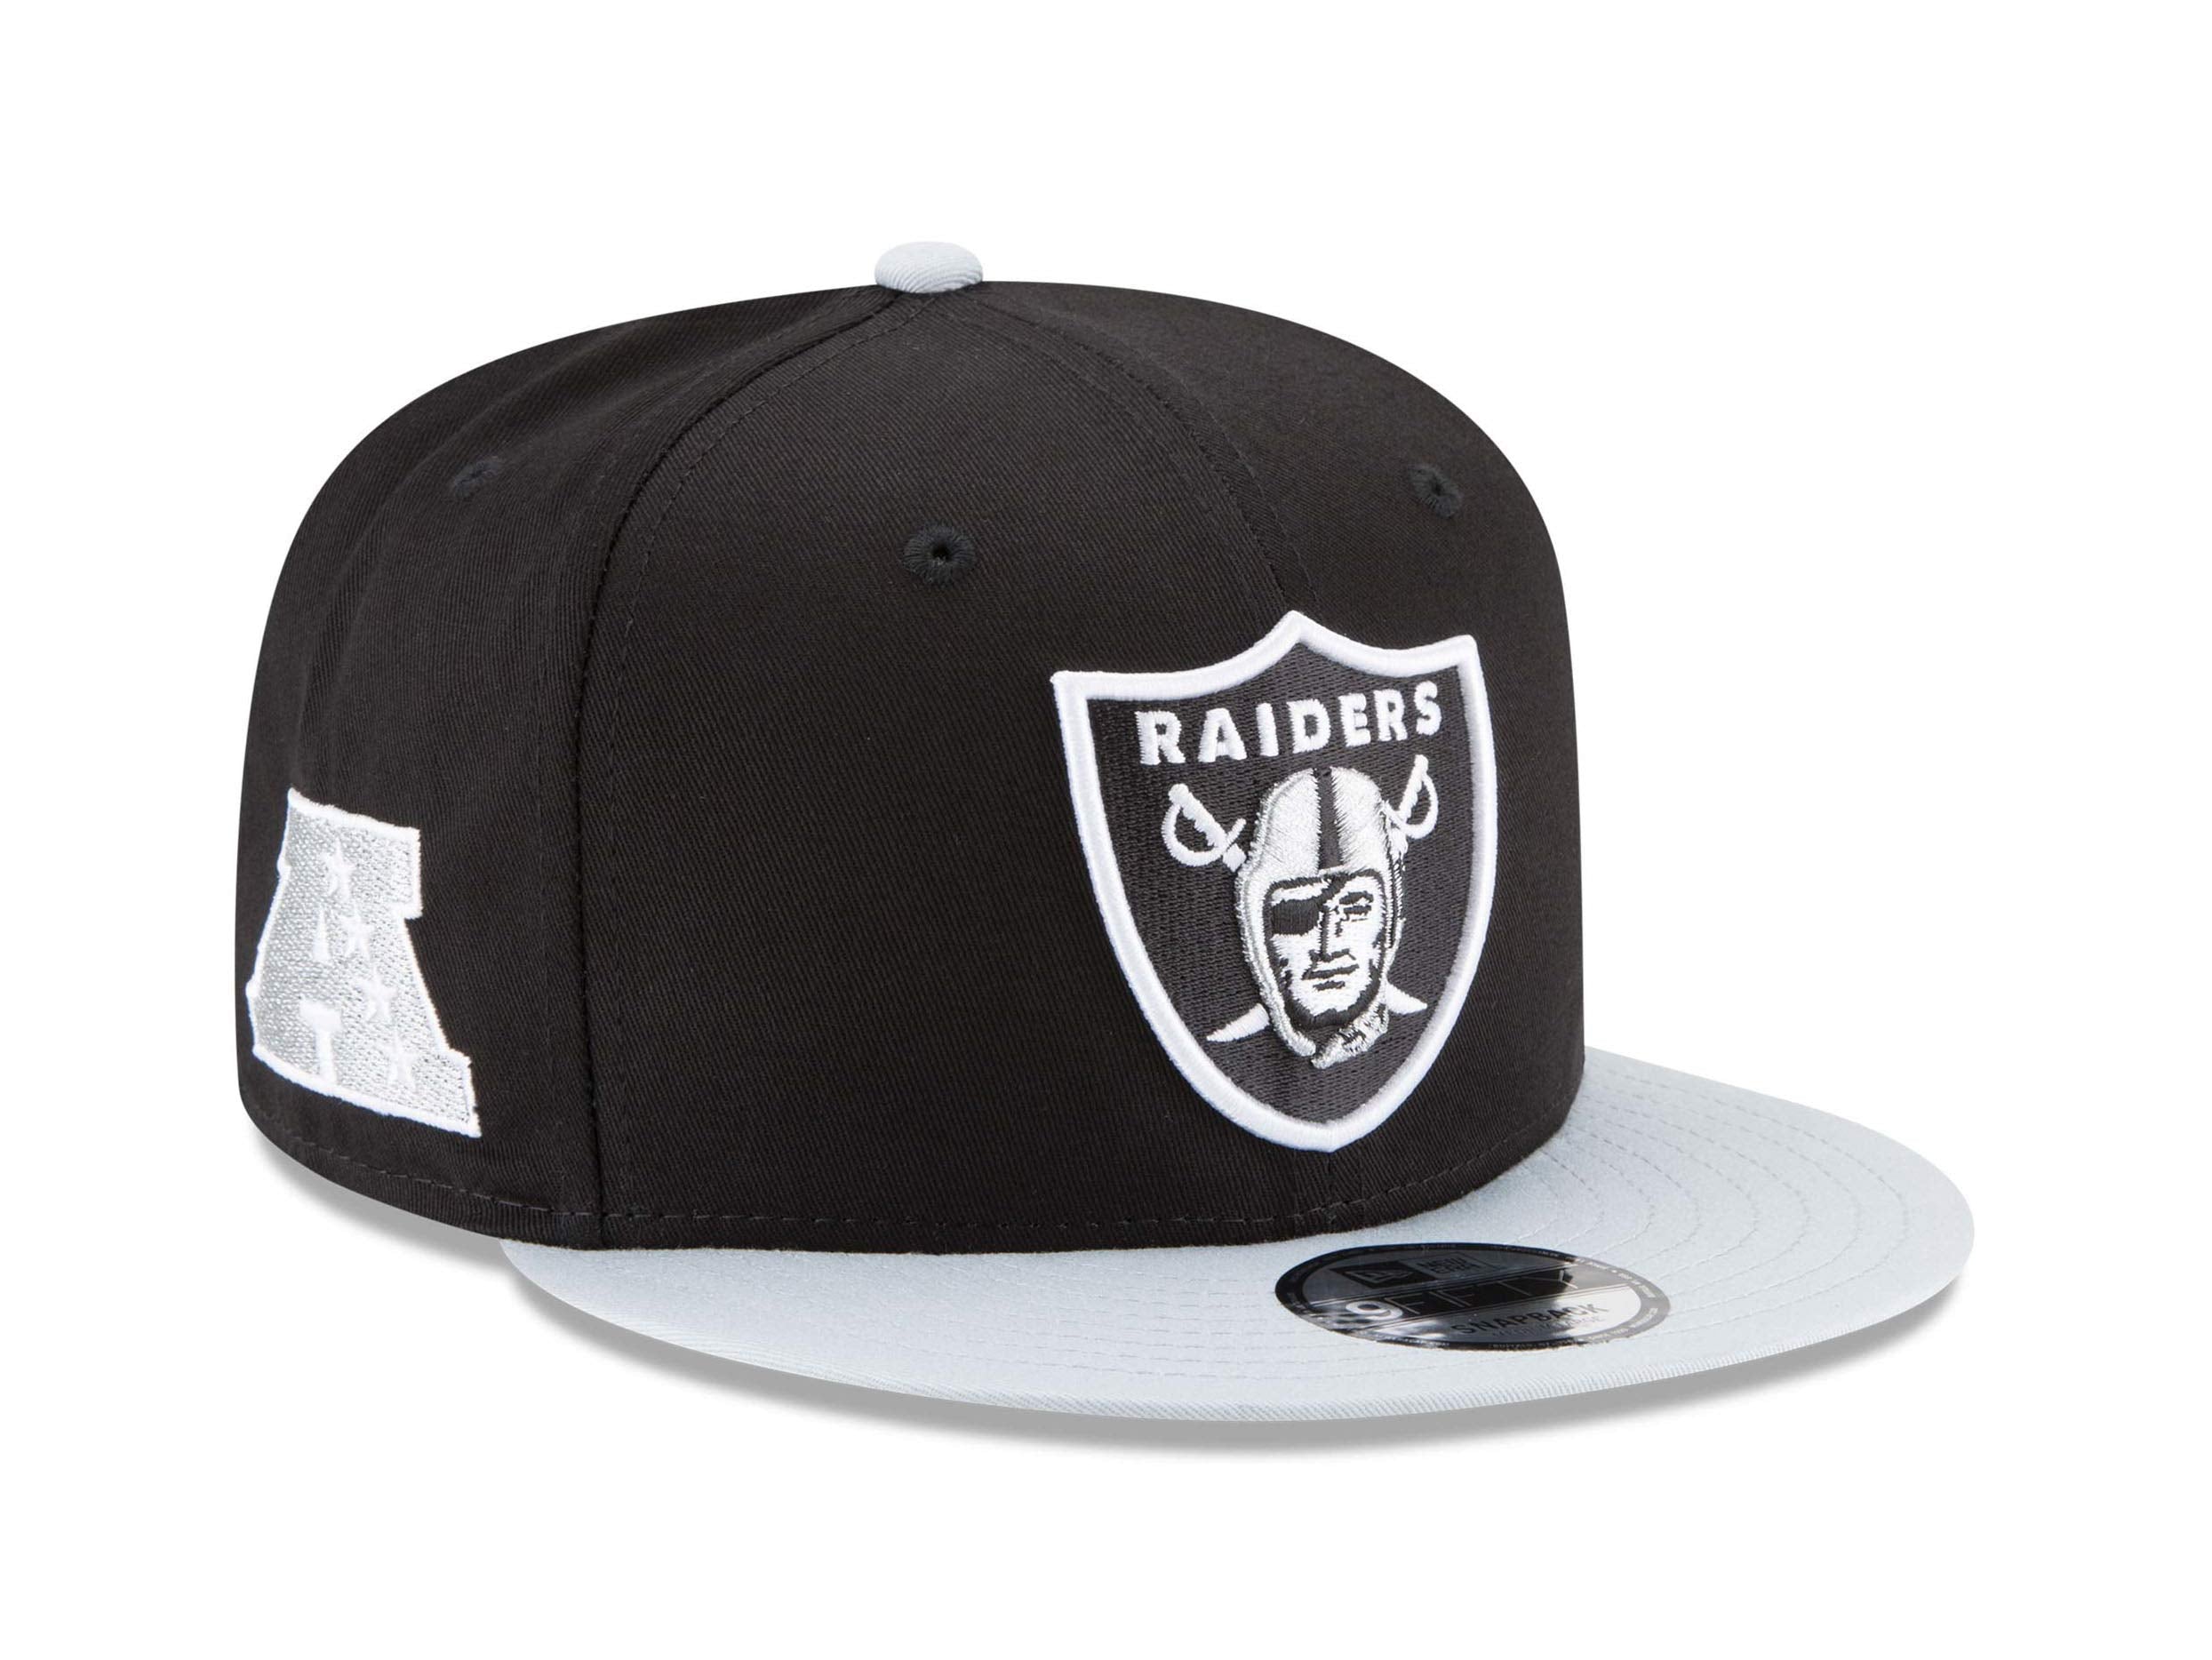 New Era Oakland Raiders Baycik Snapback Adjustable Hat - Black/Silver